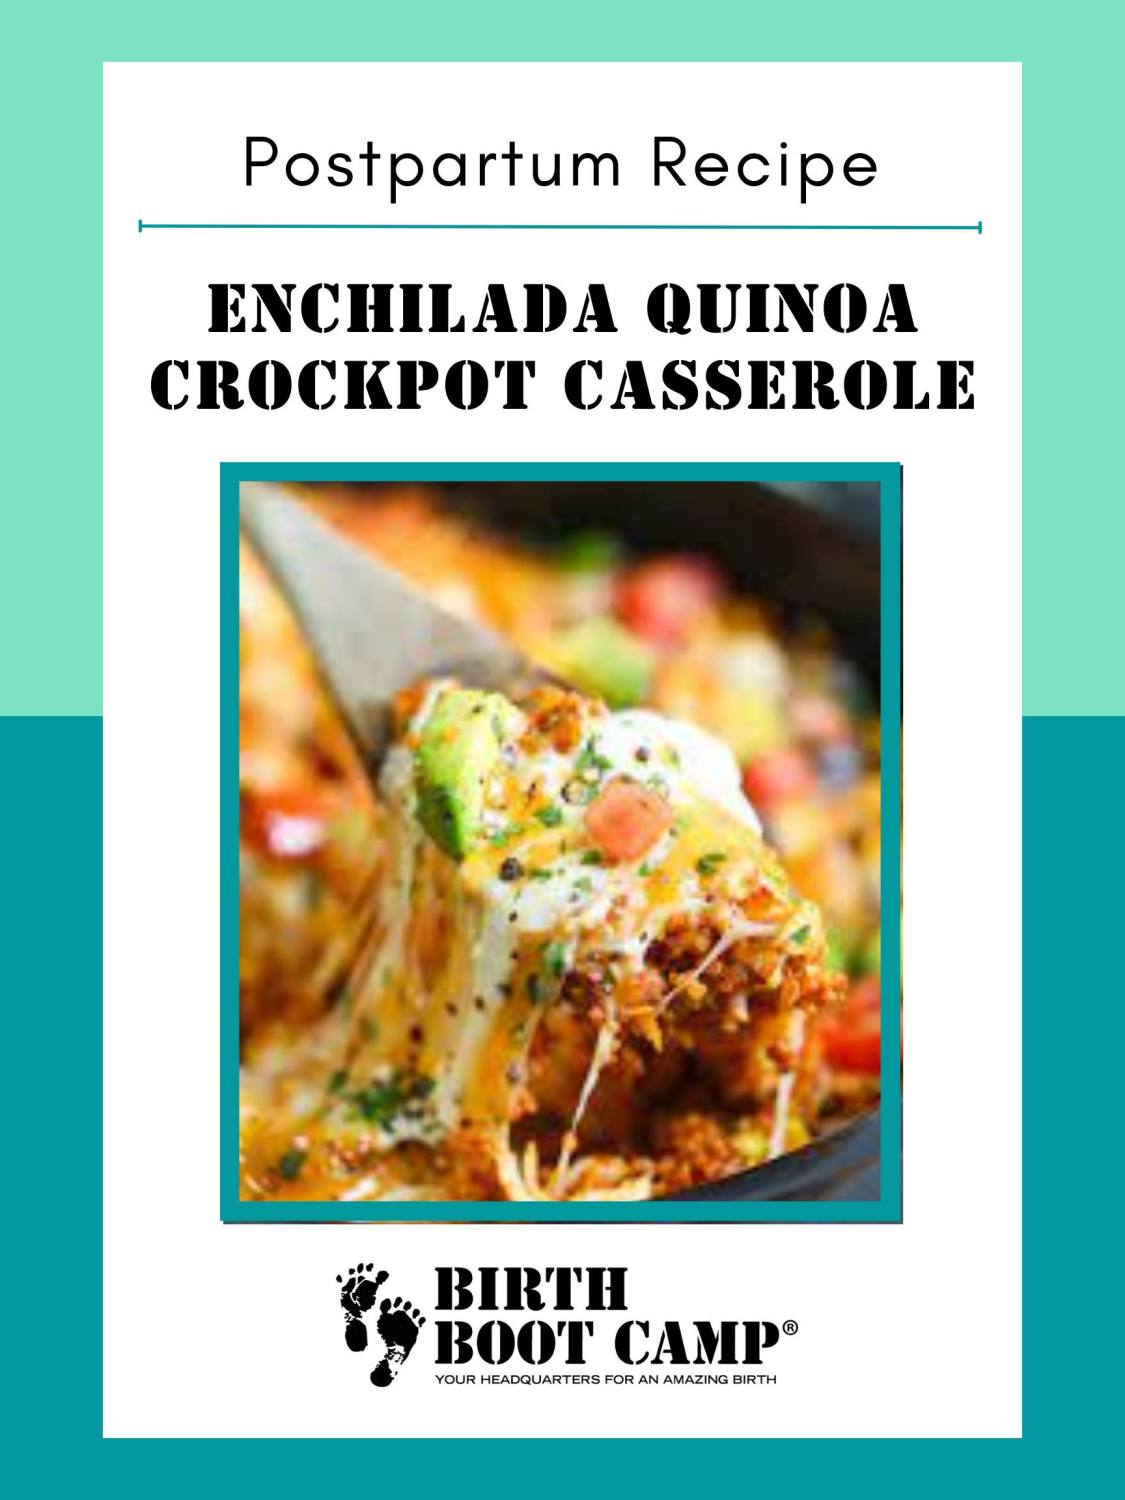 Postpartum Recipe: Enchilada Quinoa Crockpot Casserole